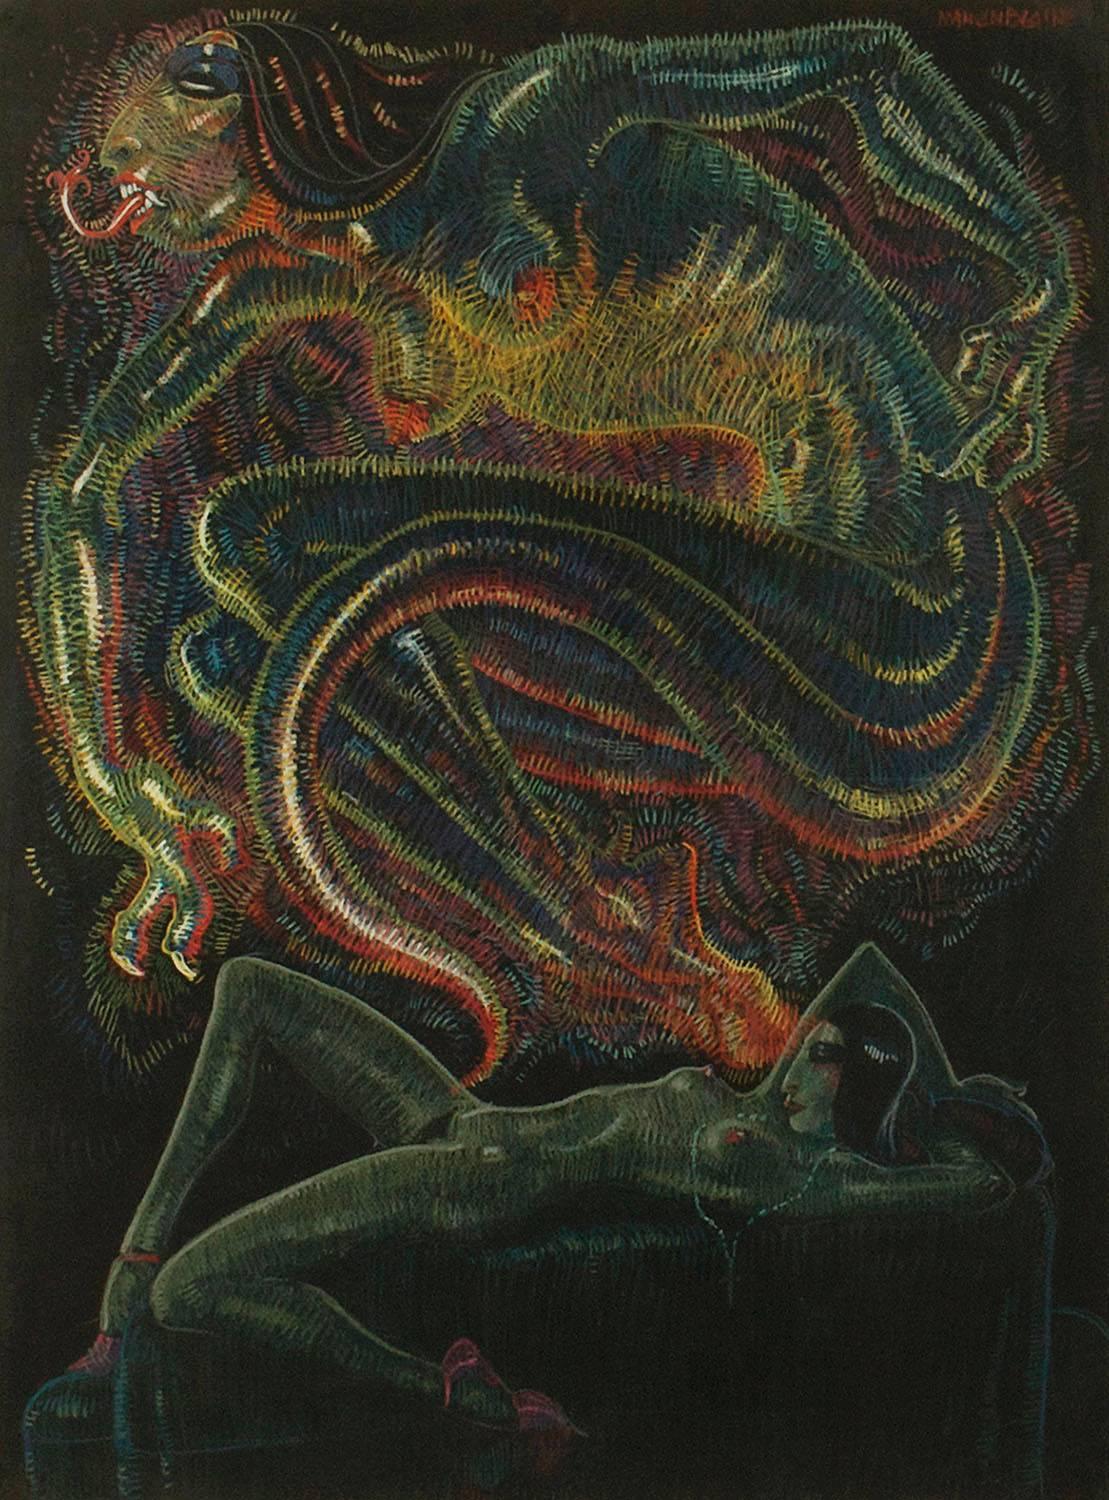 Mahlon Blaine Nude Painting - The Conjurer